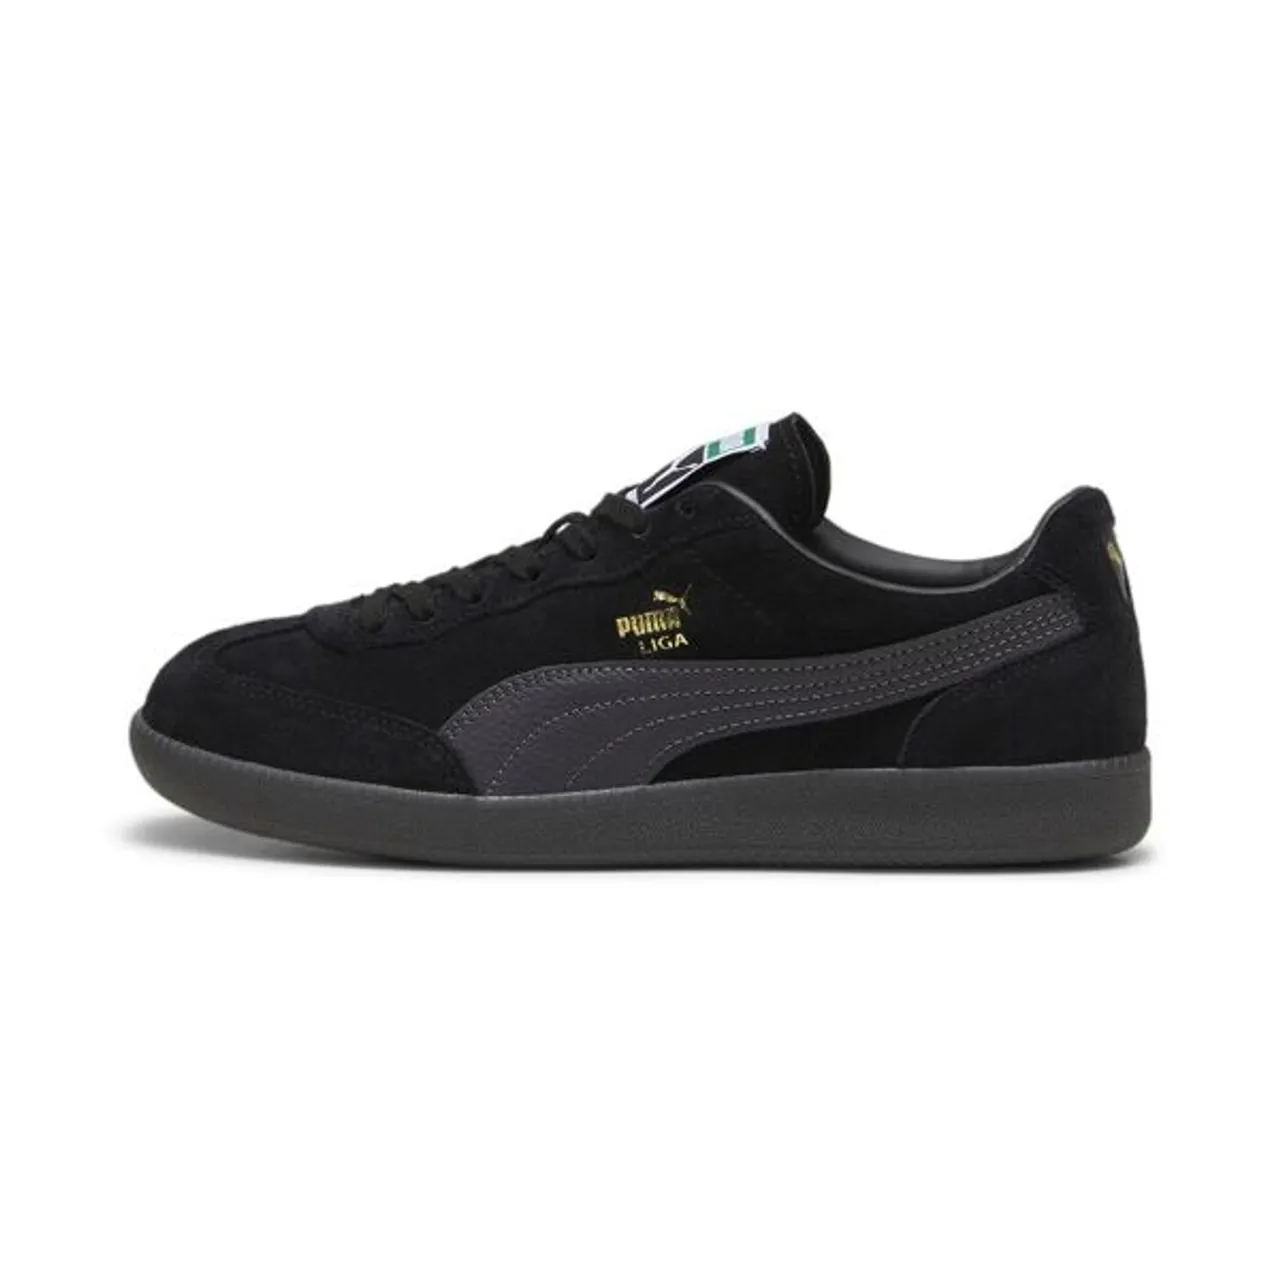 Sneaker PUMA "Liga Suede Sneakers Erwachsene" Gr. 38.5, schwarz (black dark coal gold gray) Schuhe Puma